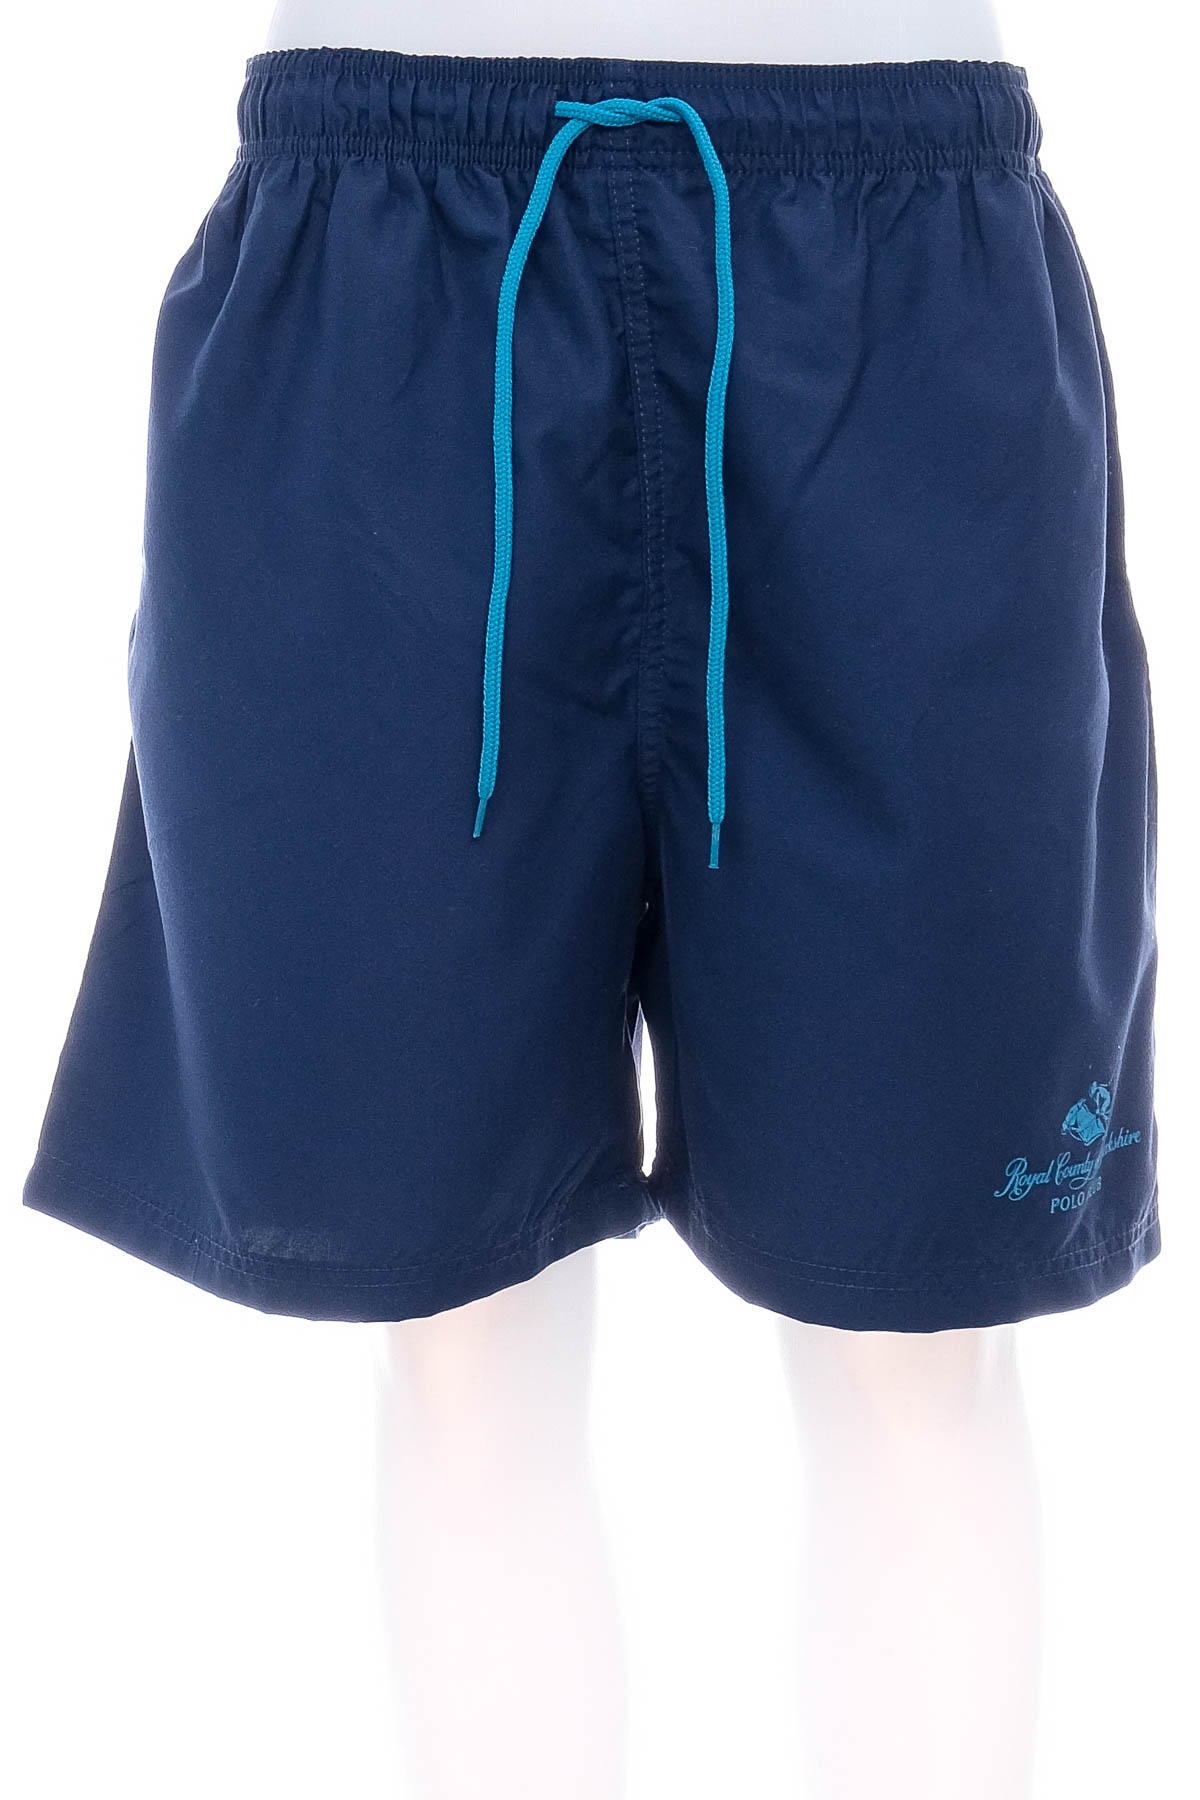 Men's shorts - Royal County of Berkshire POLO CLUB - 0